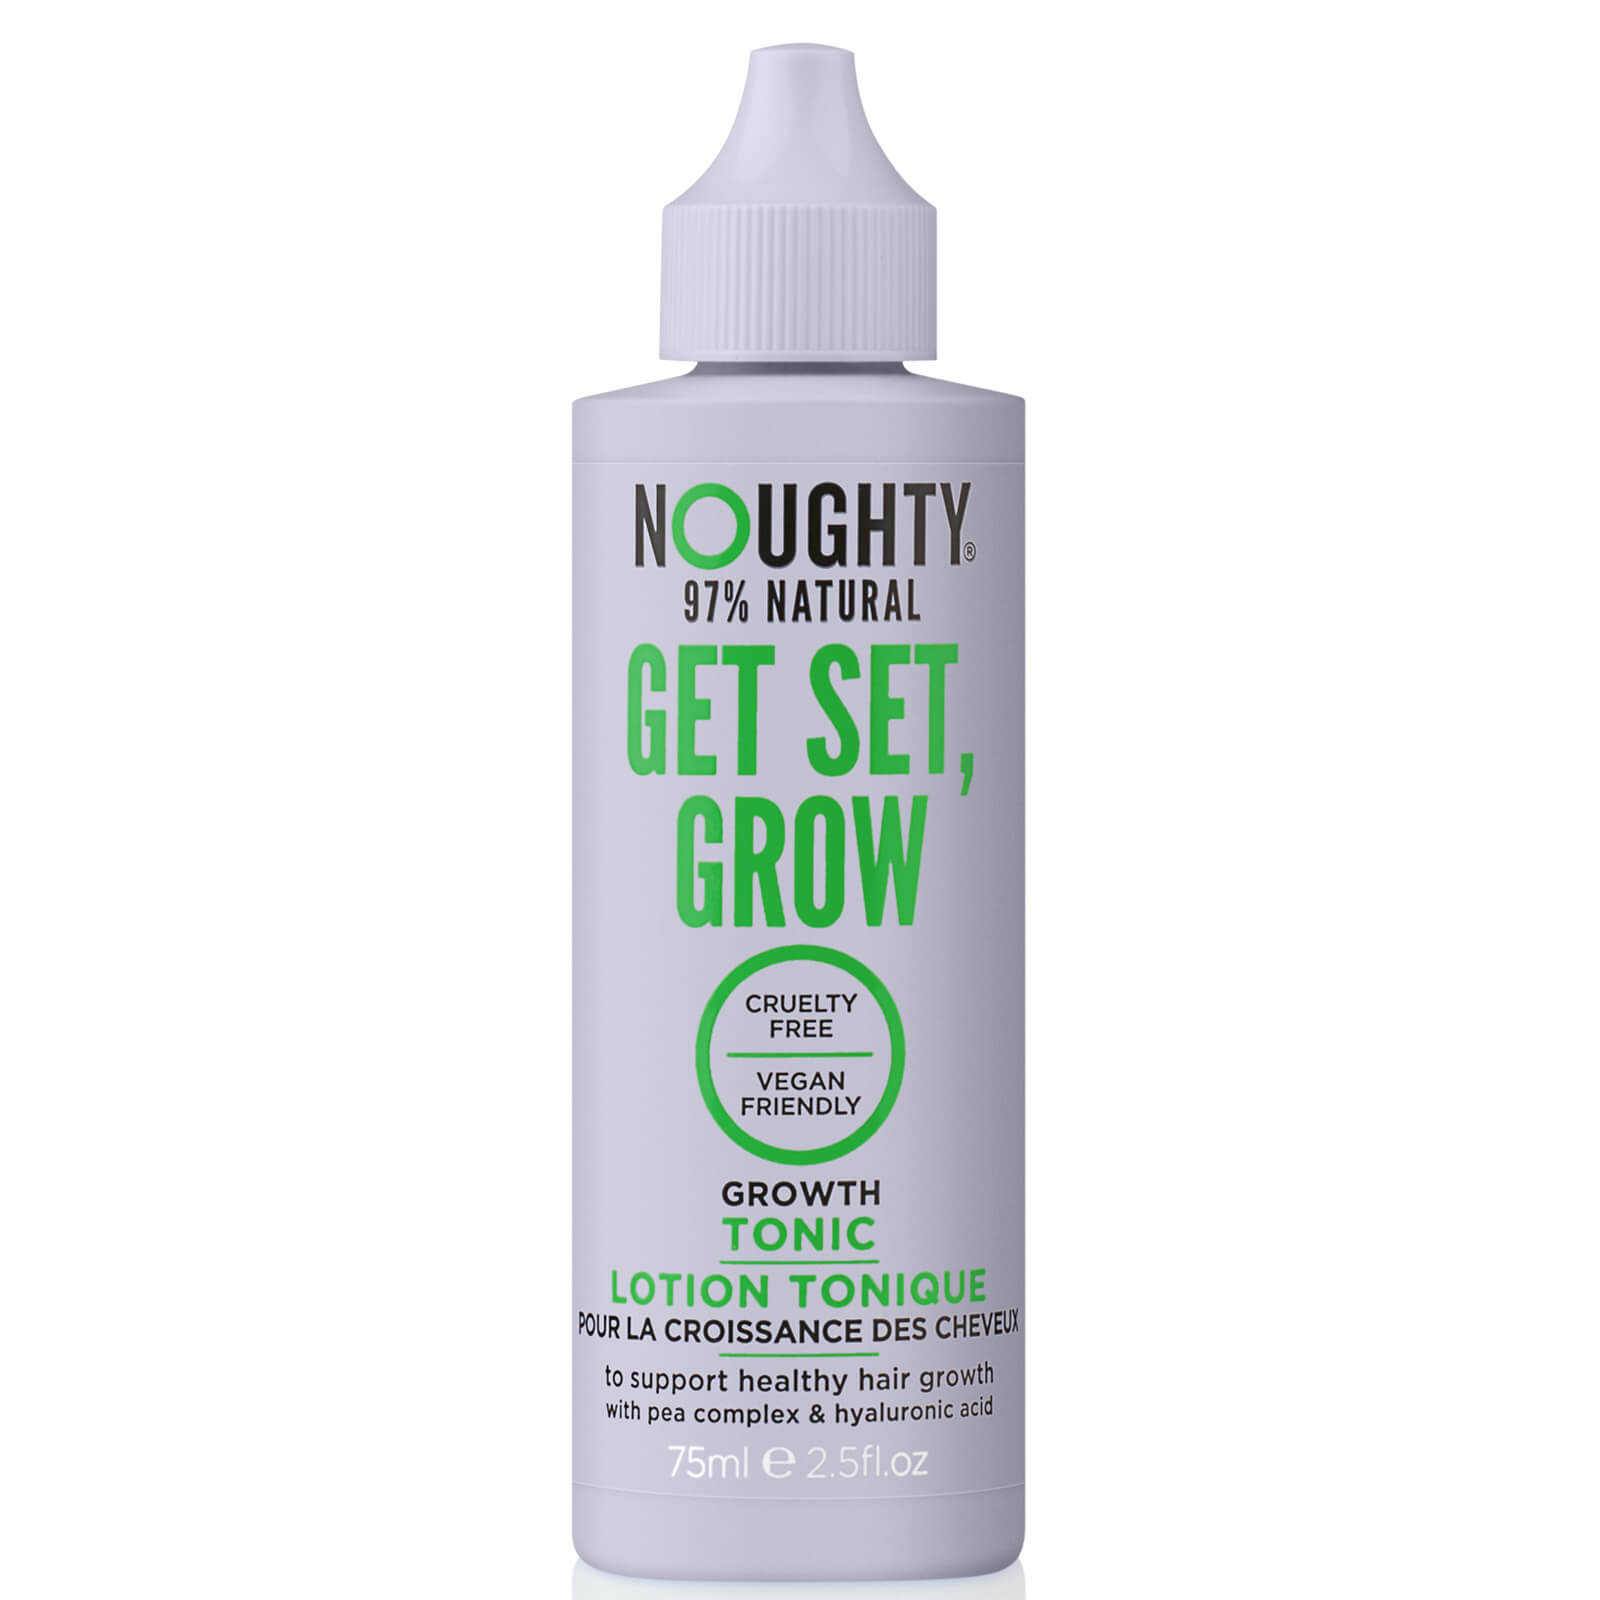 Noughty Get Set Grow Tonic 75ml lookfantastic.com imagine